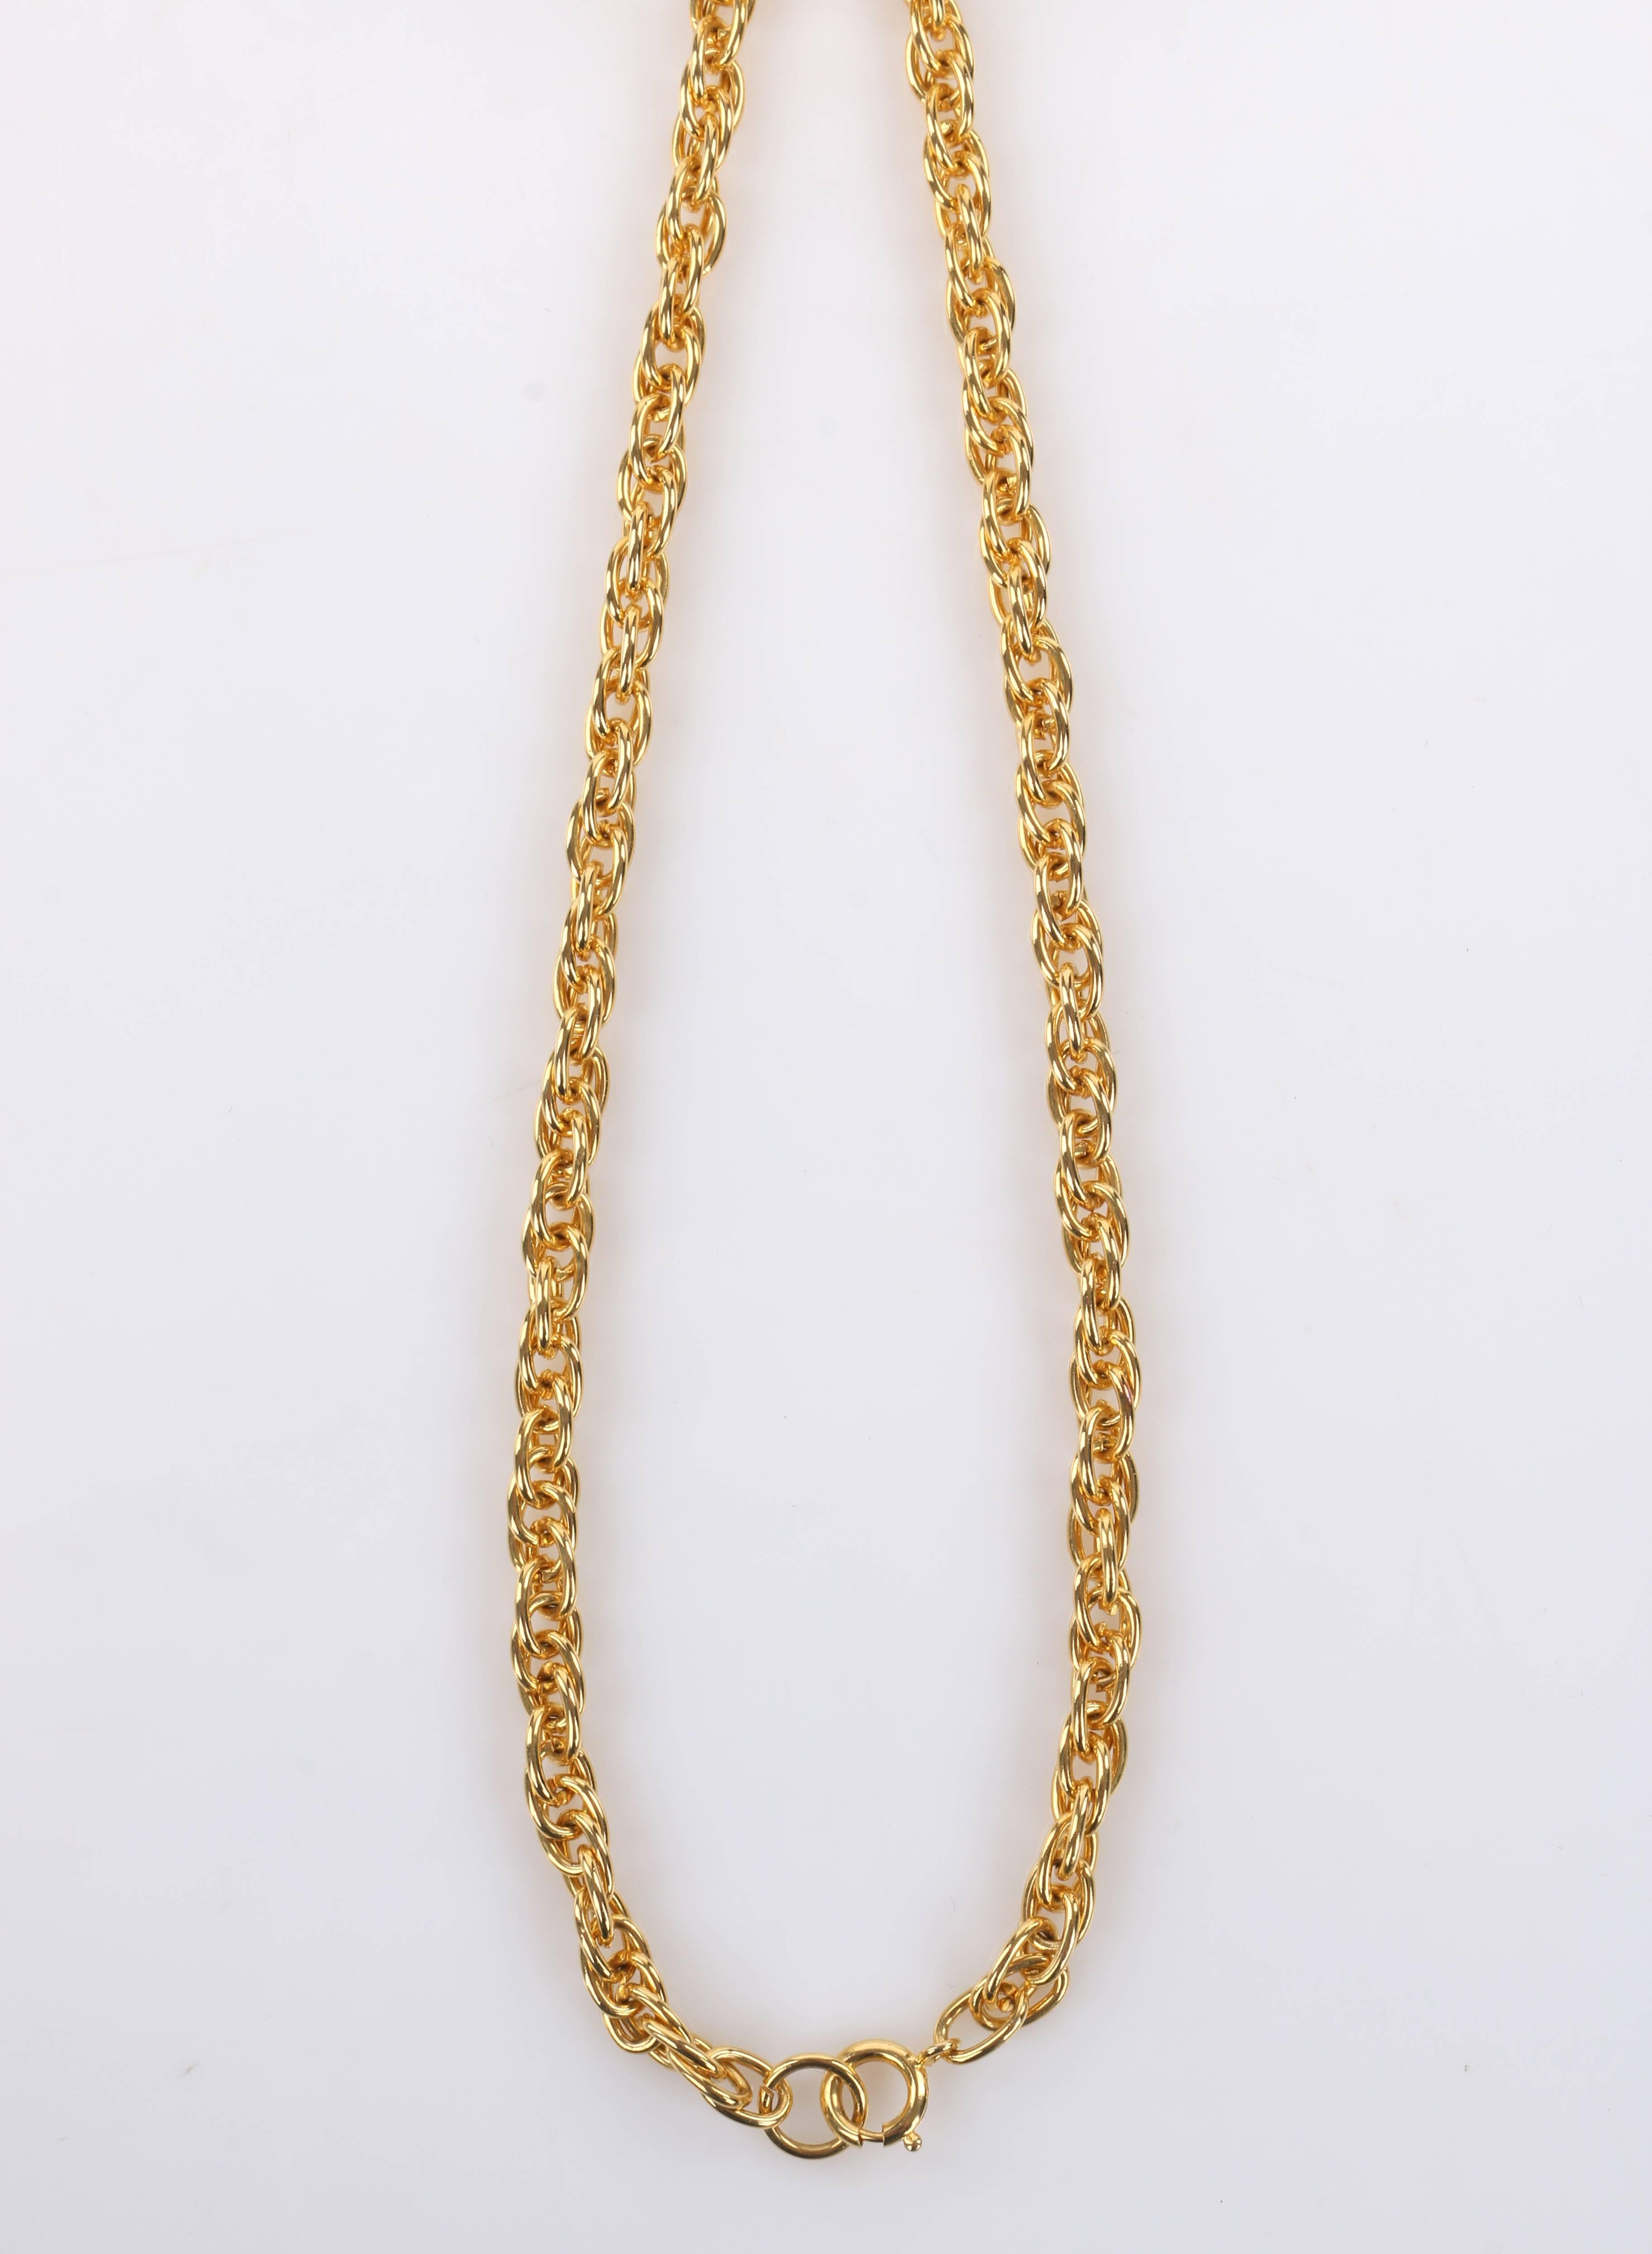 HATTIE CARNEGIE c.1970's Large Gold Fish & Anchor Pendant Statement Necklace For Sale 1